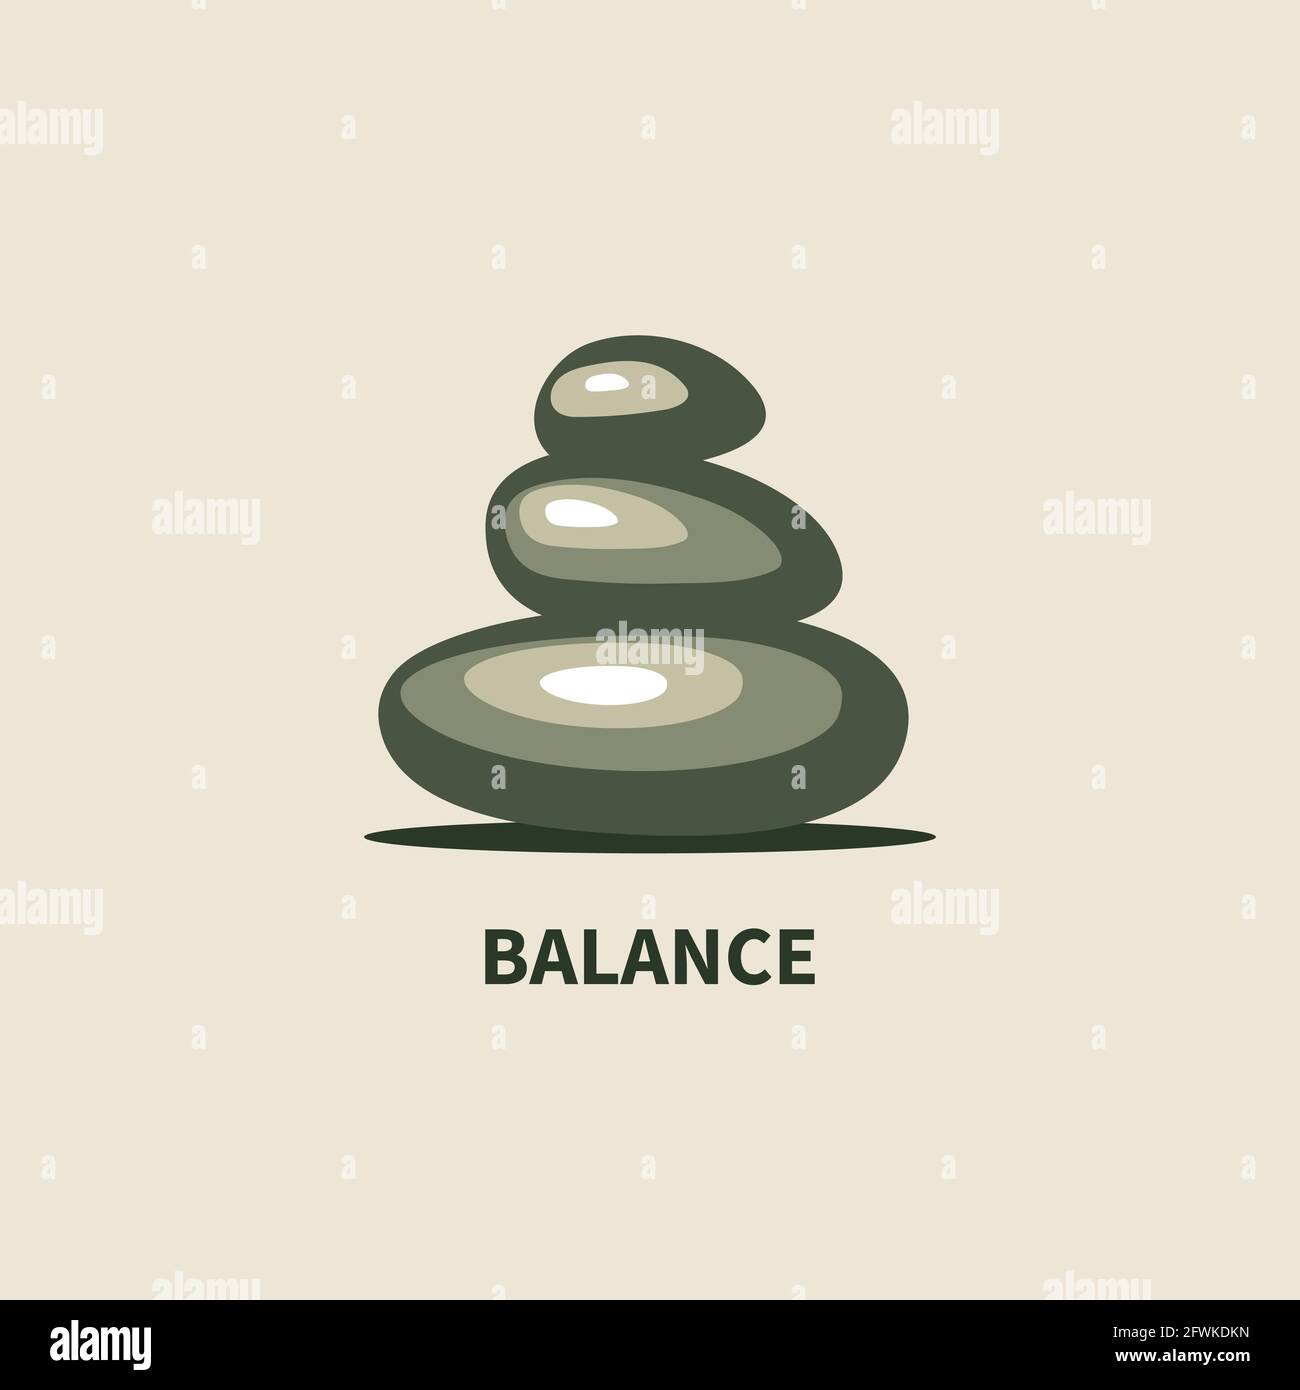 https://c8.alamy.com/comp/2FWKDKN/balance-icon-harmony-symbol-stack-of-stones-buddhism-concept-meditation-sign-vector-minimal-illustration-2FWKDKN.jpg